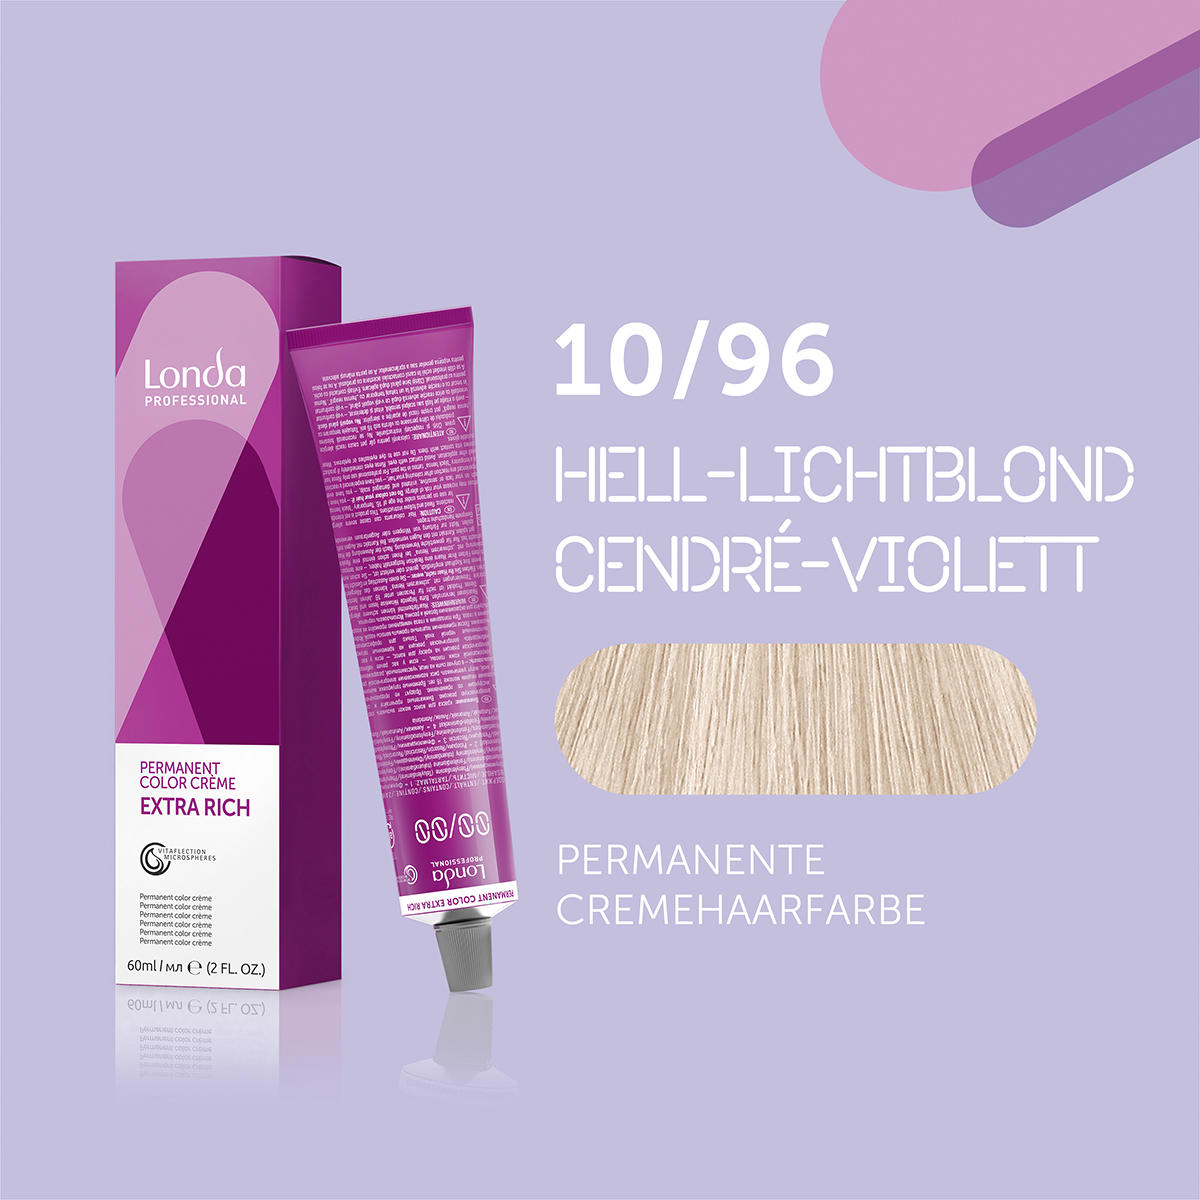 Londa Permanente Cremehaarfarbe Extra Rich 10/96 Hell Lichtblond Cendré Violett, Tube 60 ml - 1